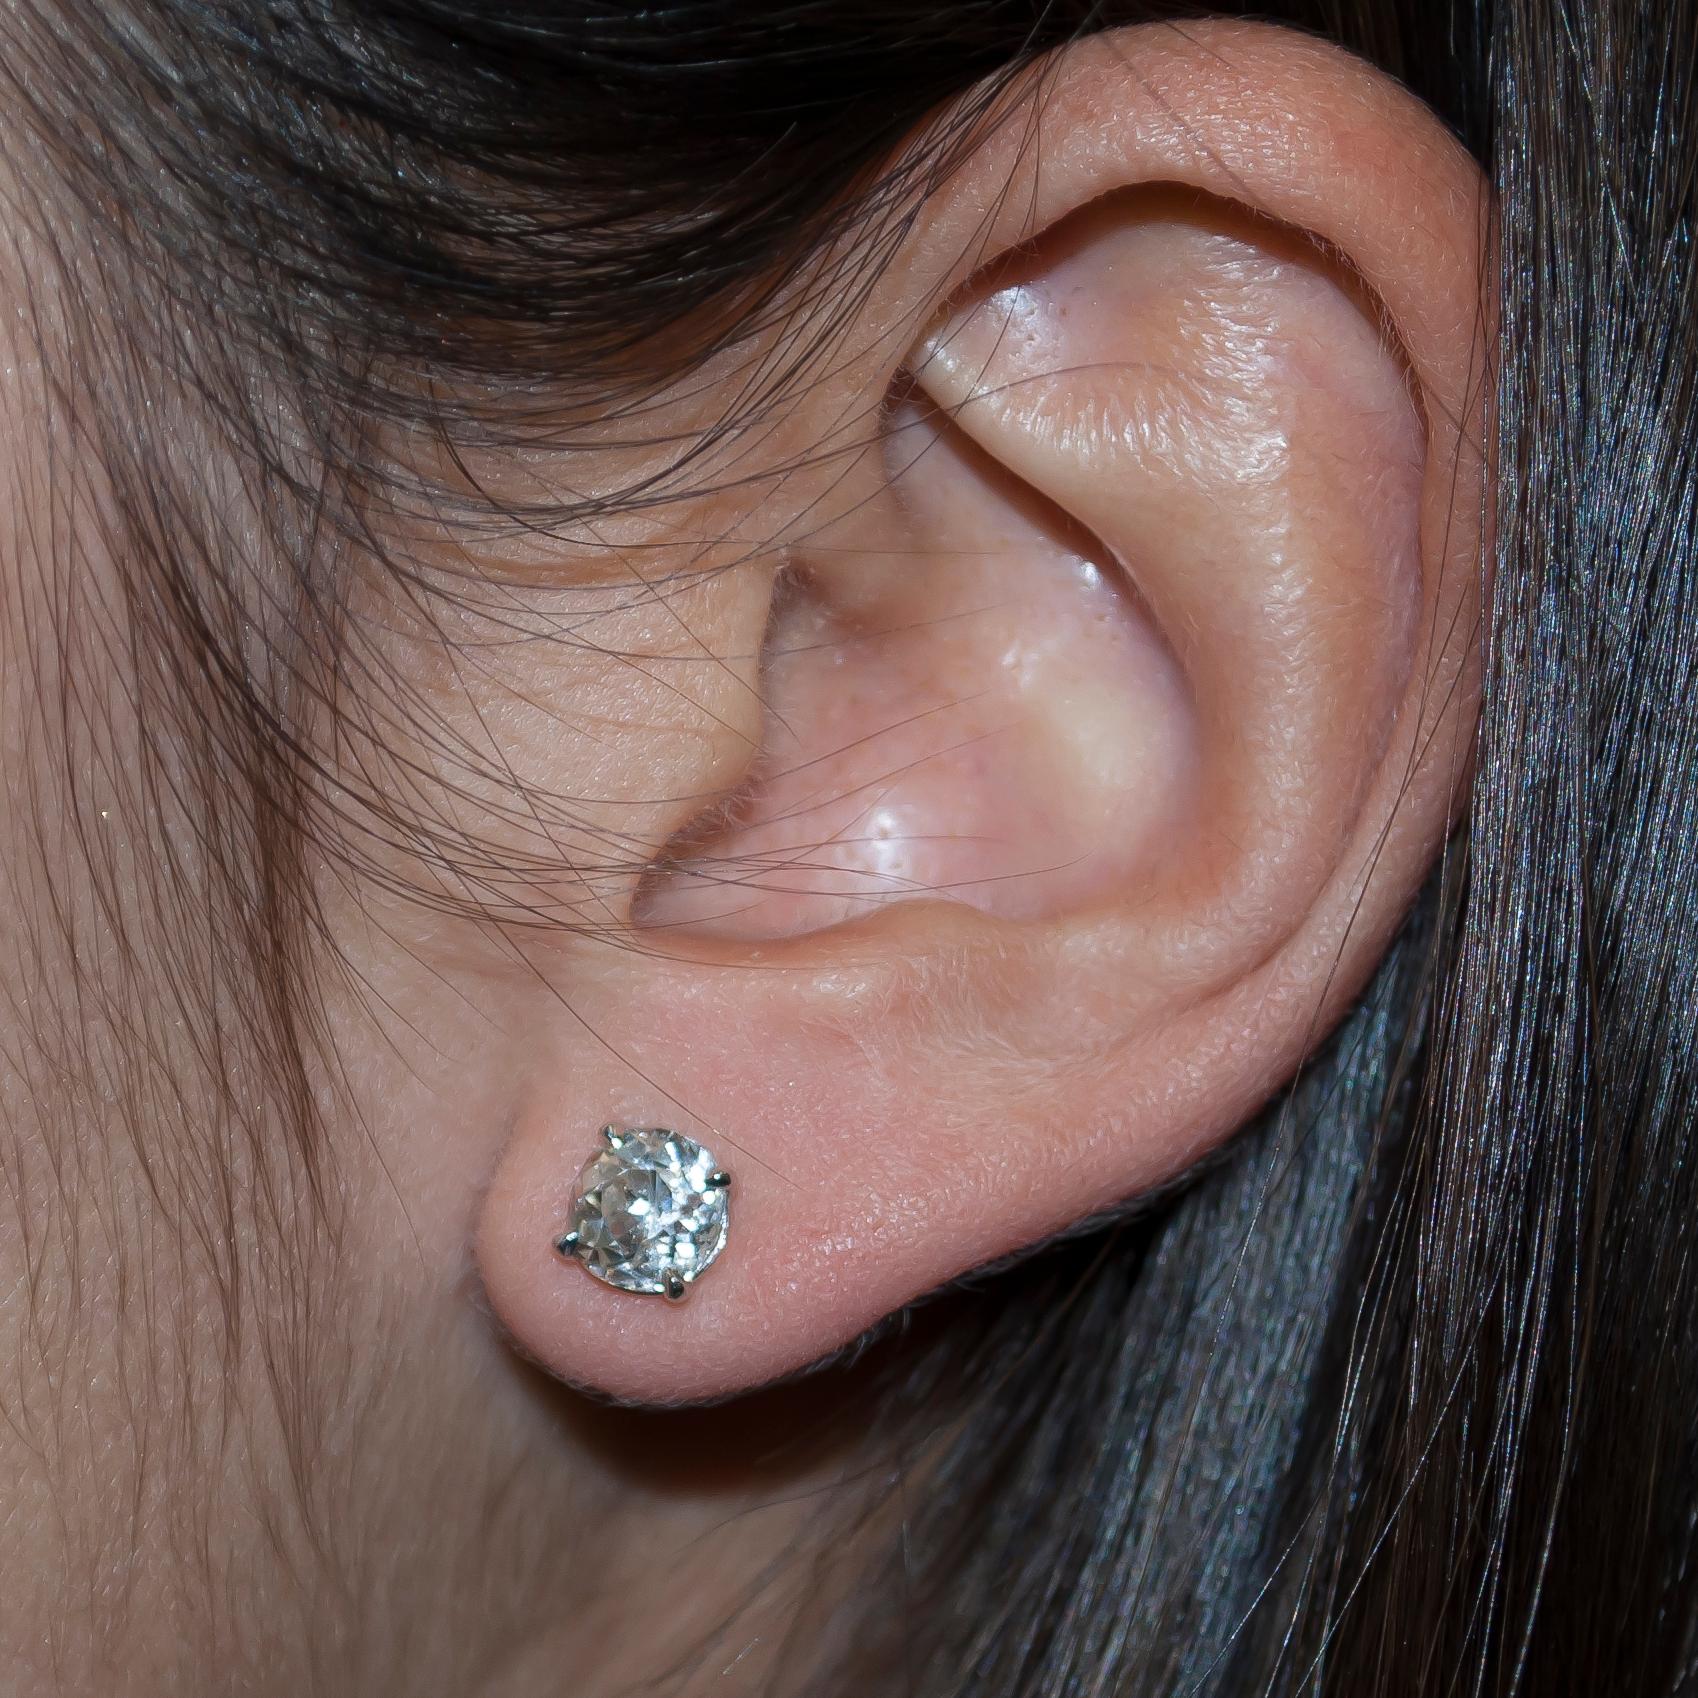 cushion diamond earrings